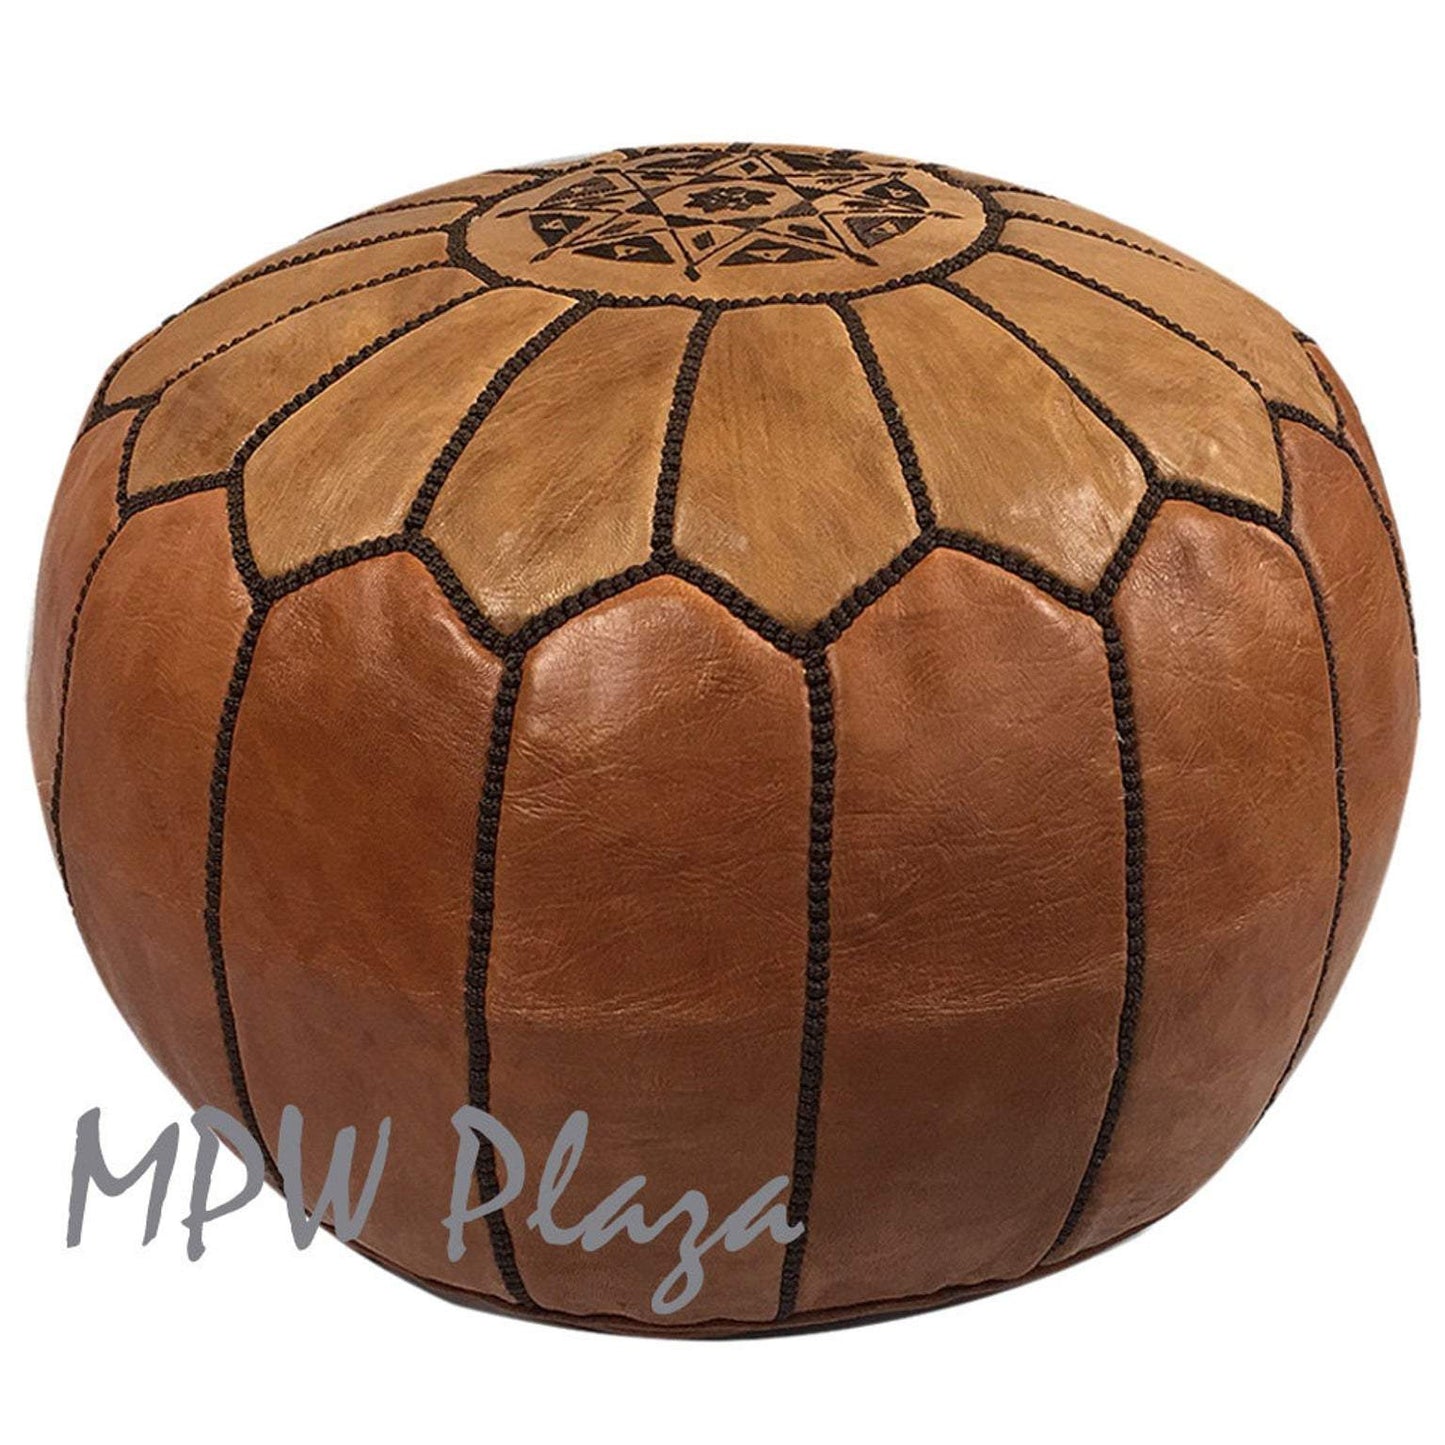 MPW Plaza® Moroccan Pouf, Two Tone Light Tan/Tan tone w dark embroidery, 14" x 20" Topshelf Moroccan Leather,  ottoman (Cover) freeshipping - MPW Plaza®